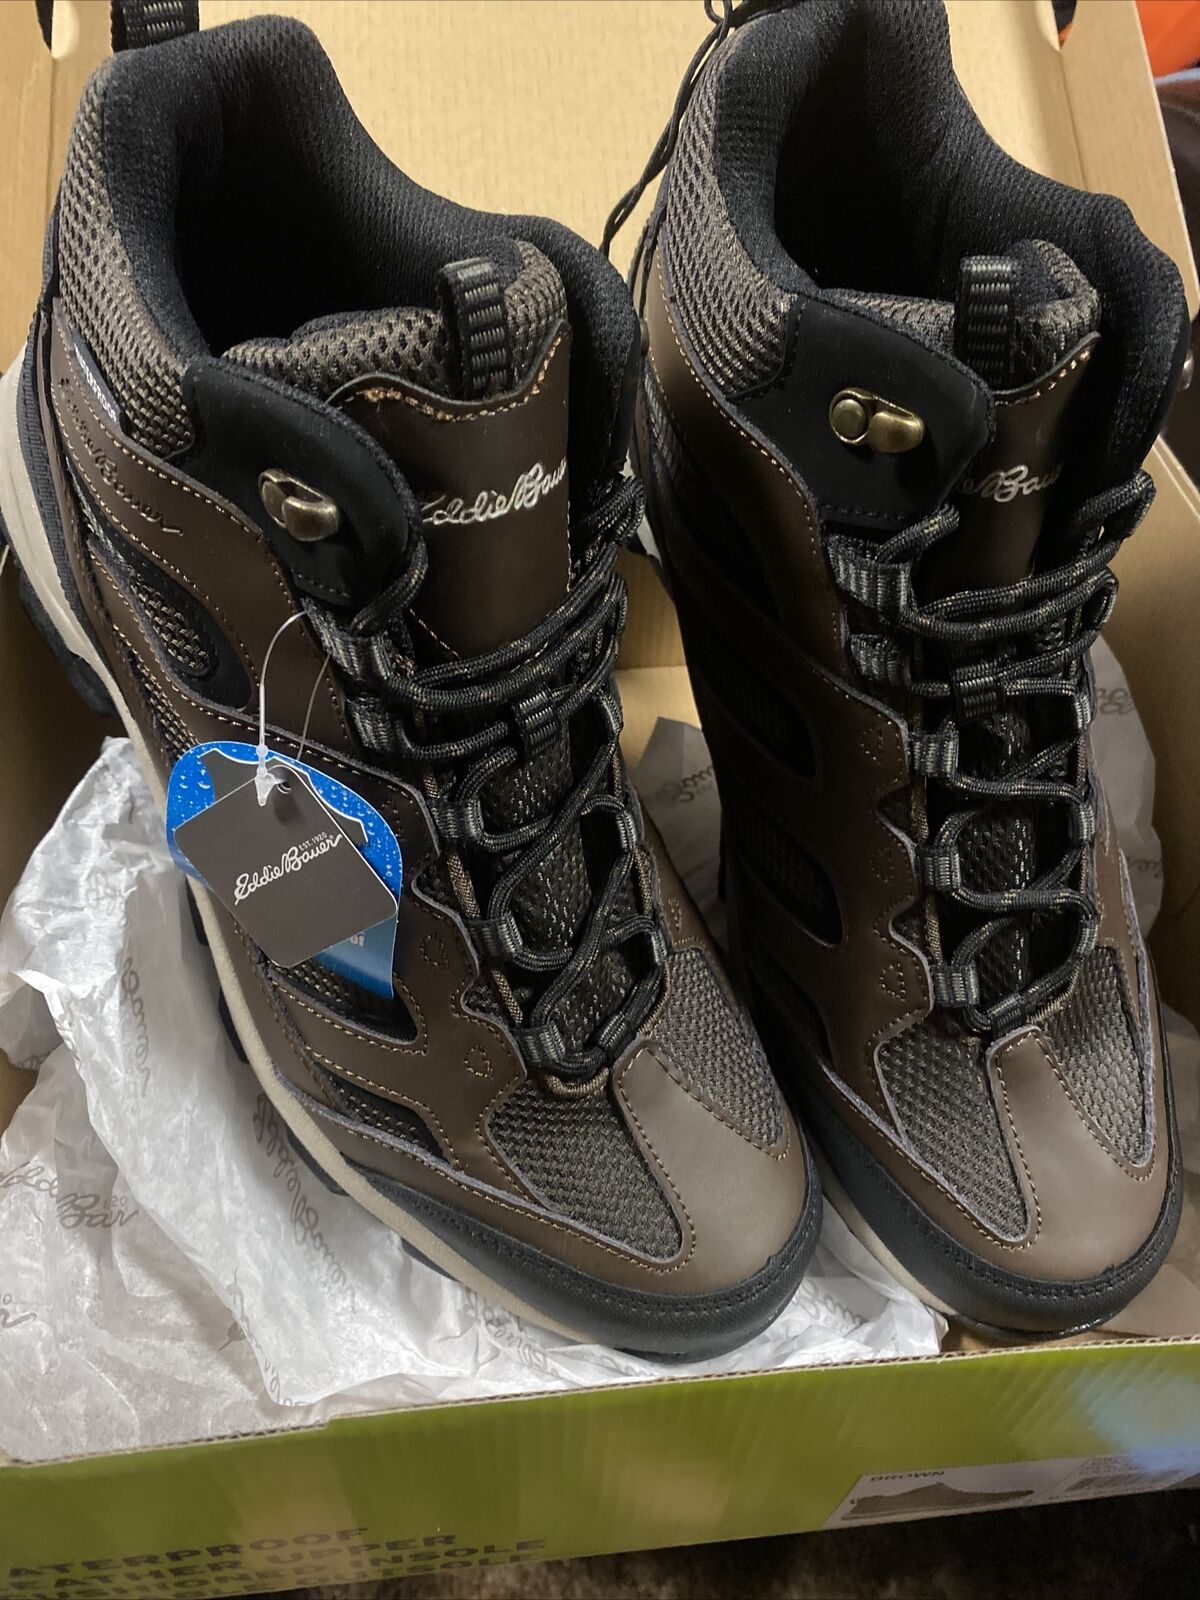 New Eddie Bauer Men's Graham Hiking Boots Leather Waterproof Brown Size 12M